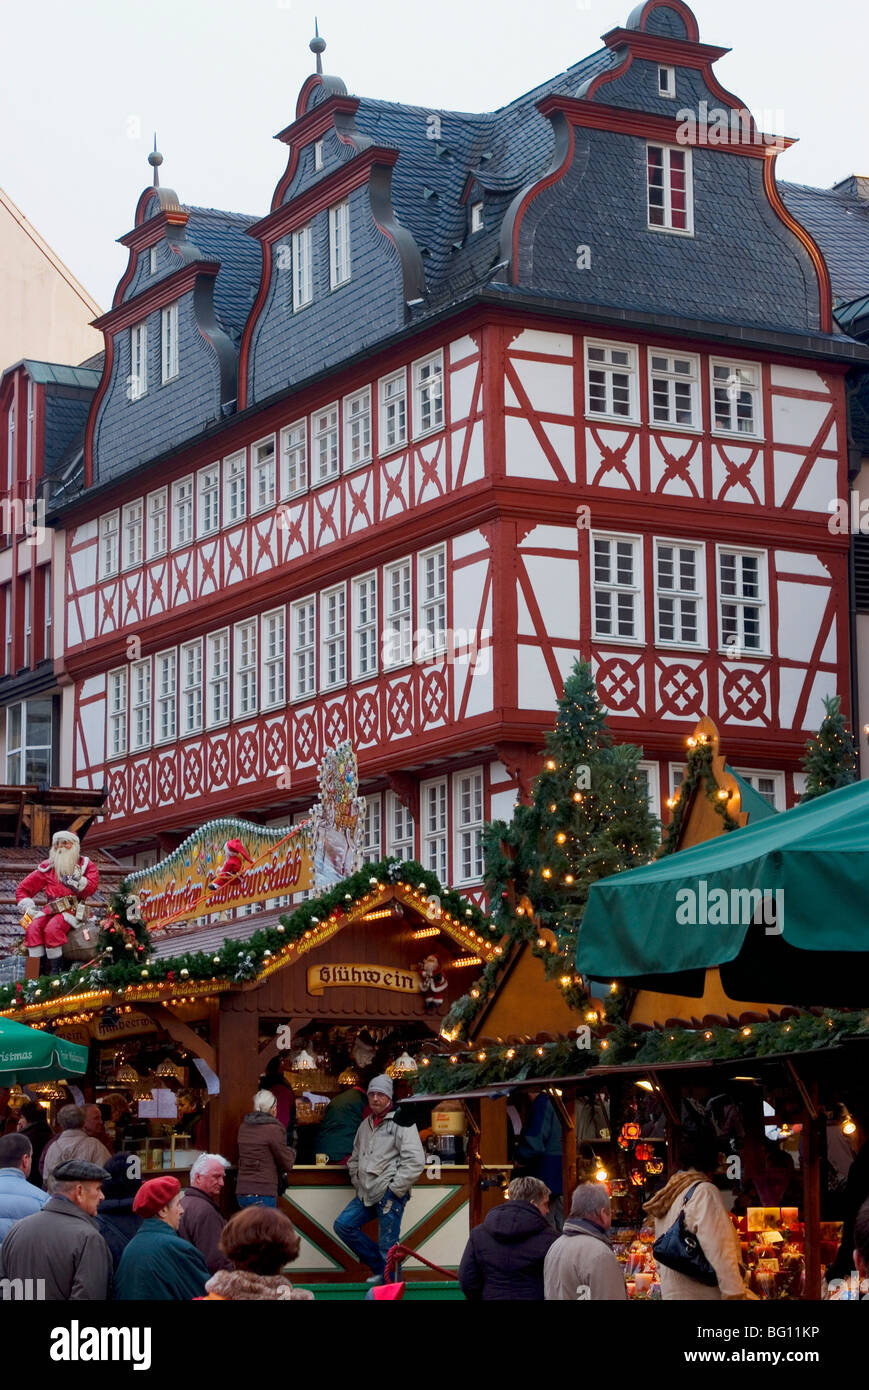 Weihnachtsmarkt (Marché de Noël), Frankfurt, Hesse, Germany, Europe Banque D'Images